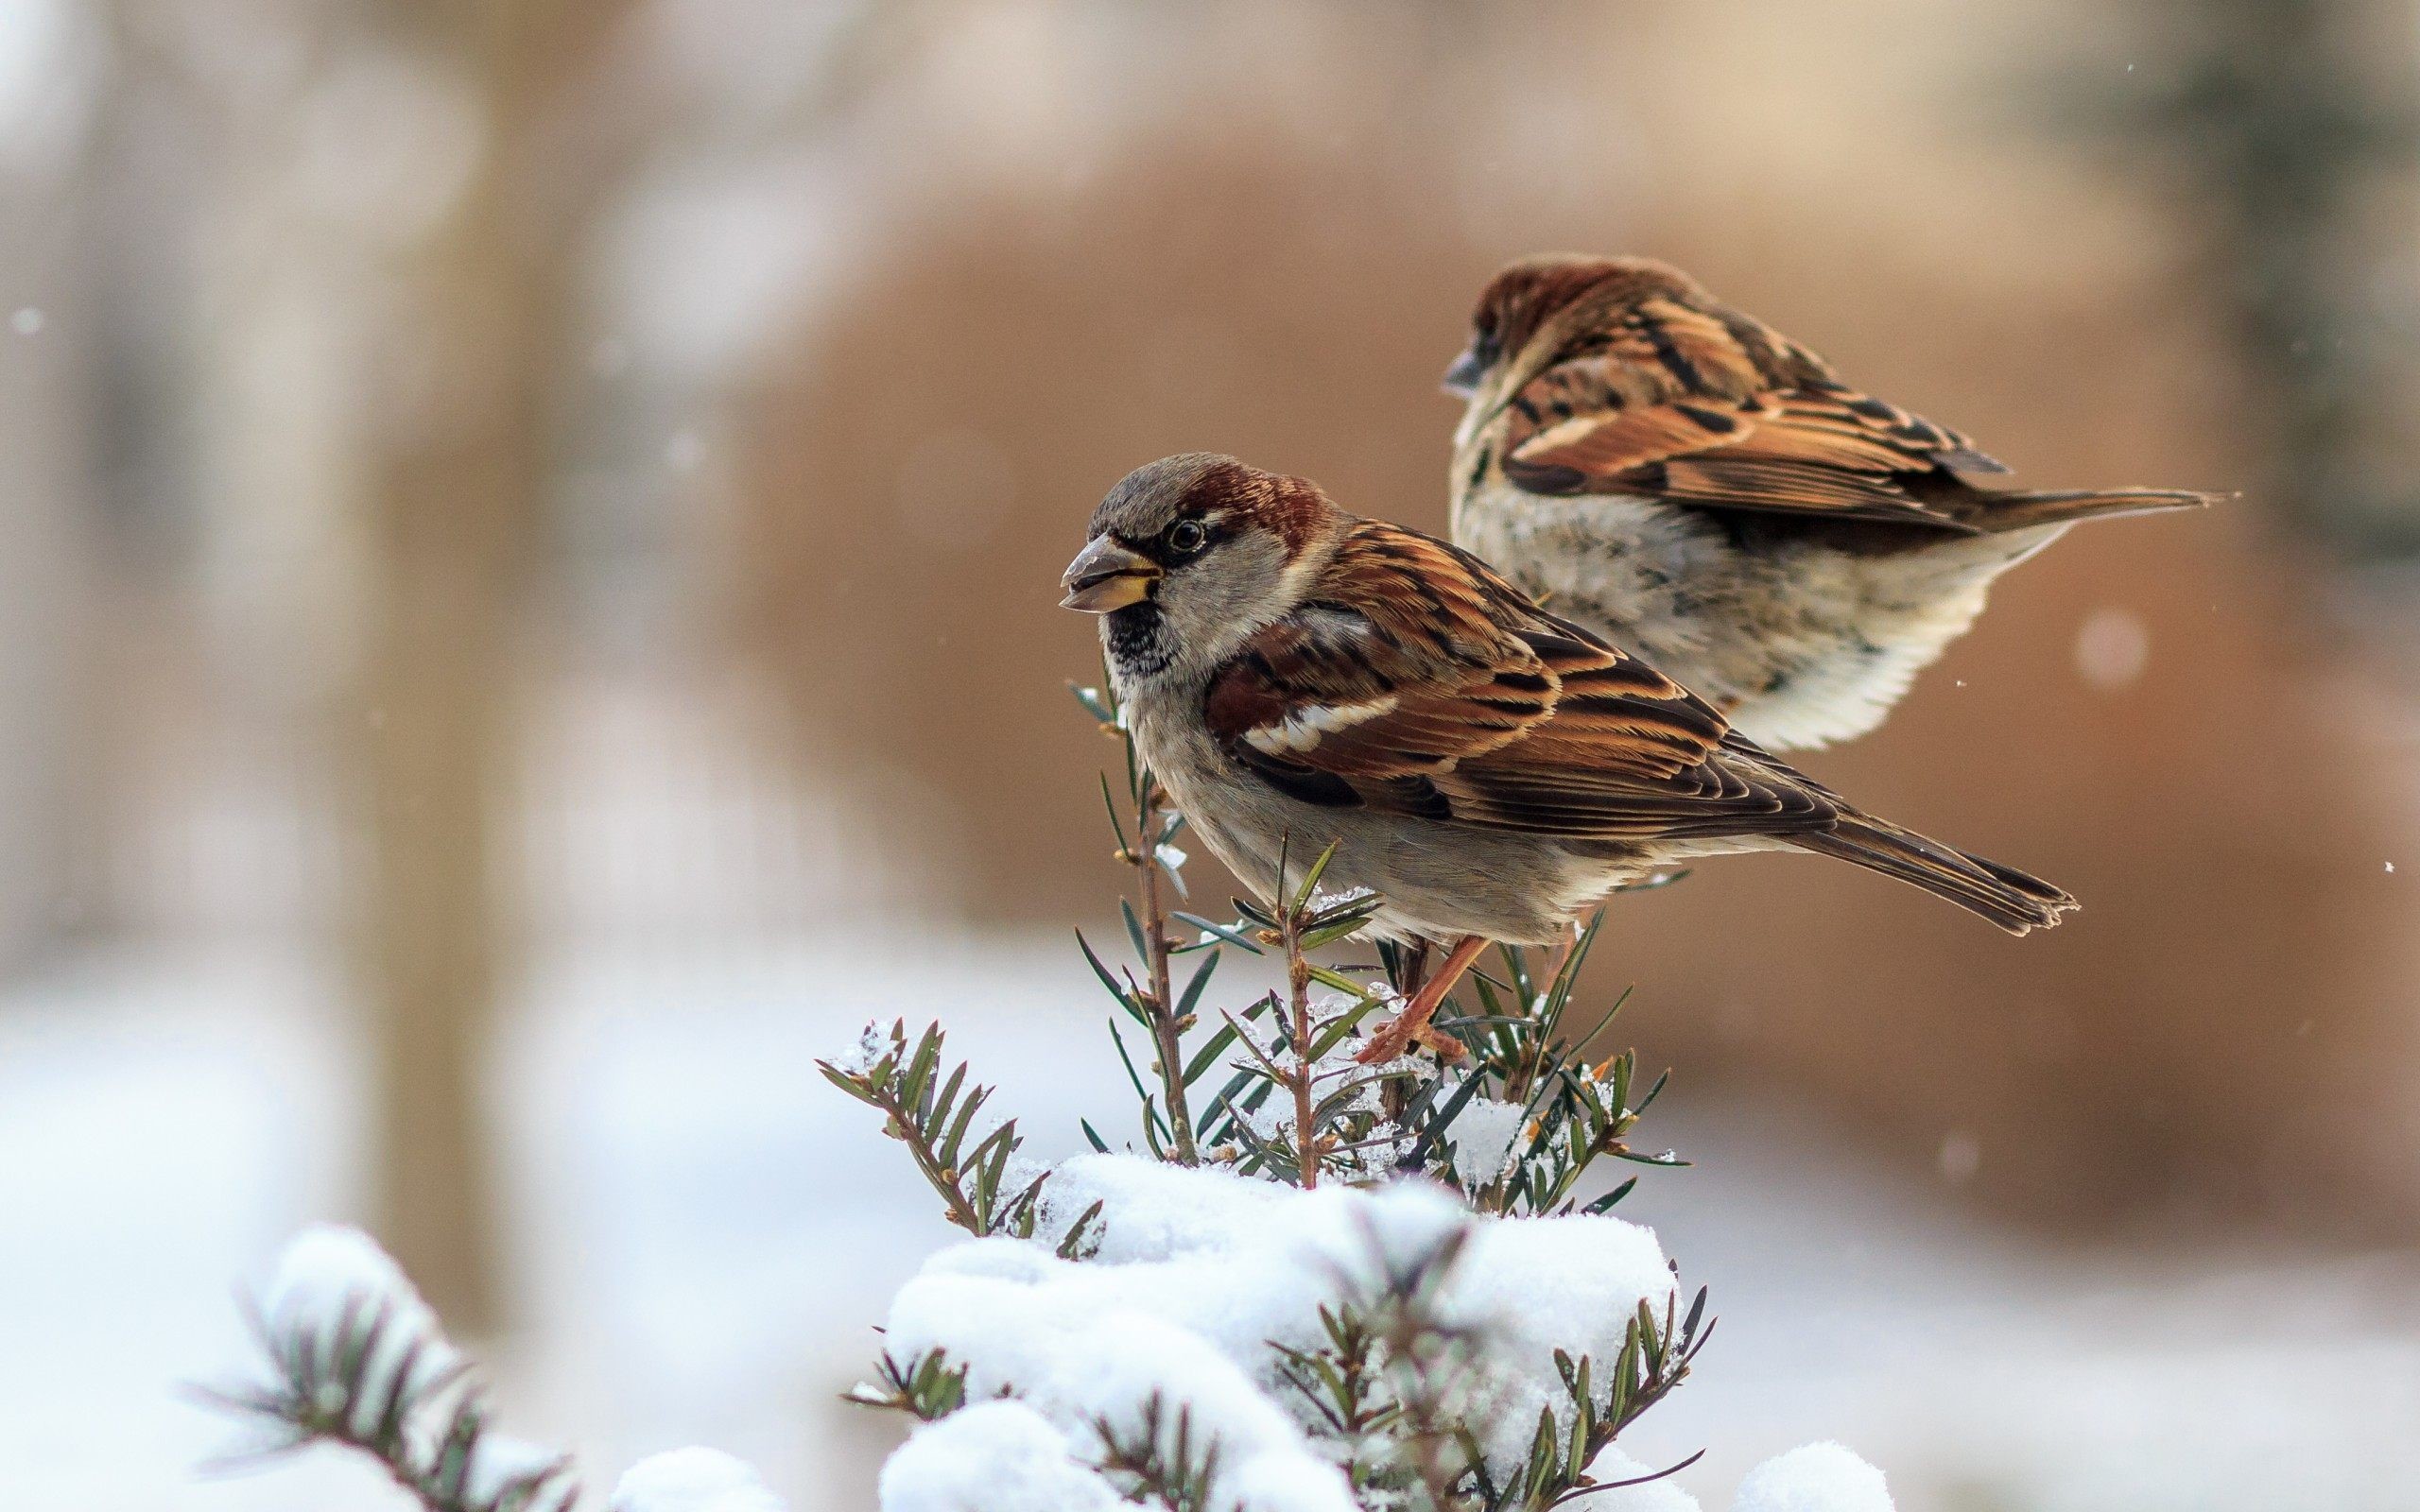 2560x1600 Sparrows winter birds wallpaper download sparrows winter birds jpg   Winter bird wallpaper